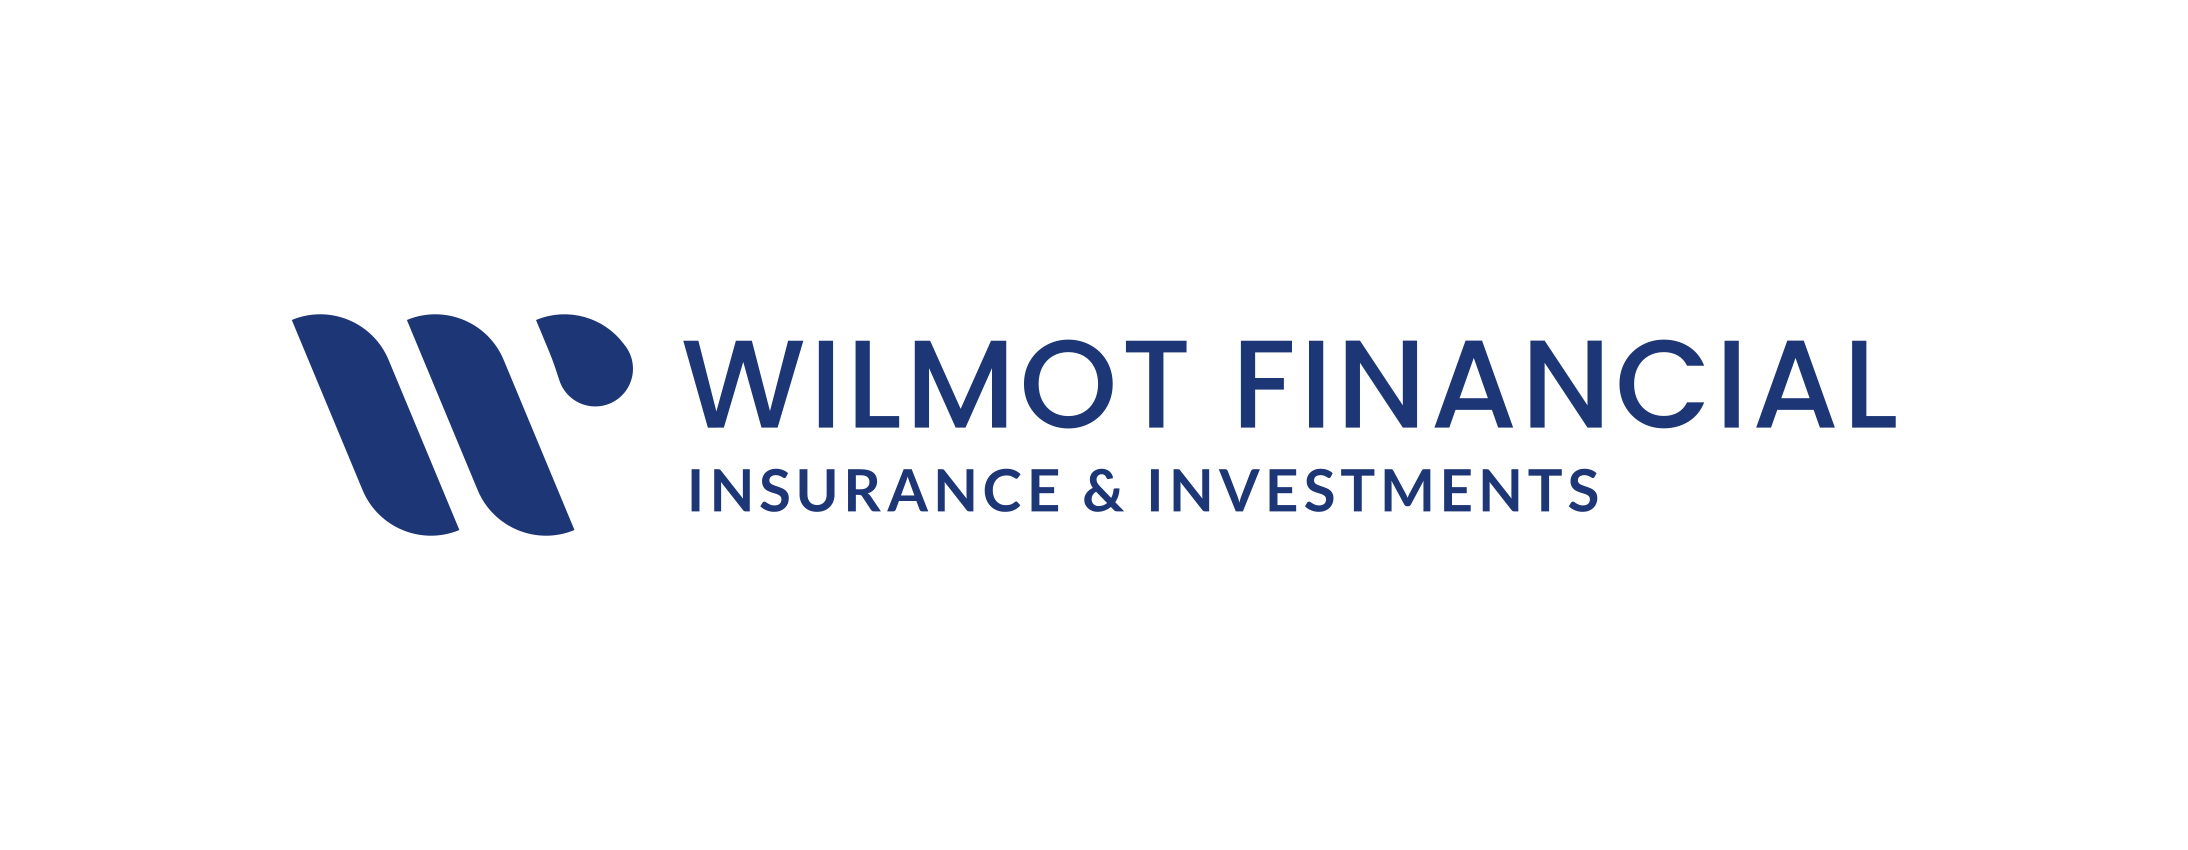 Wilmot Financial Services Inc.